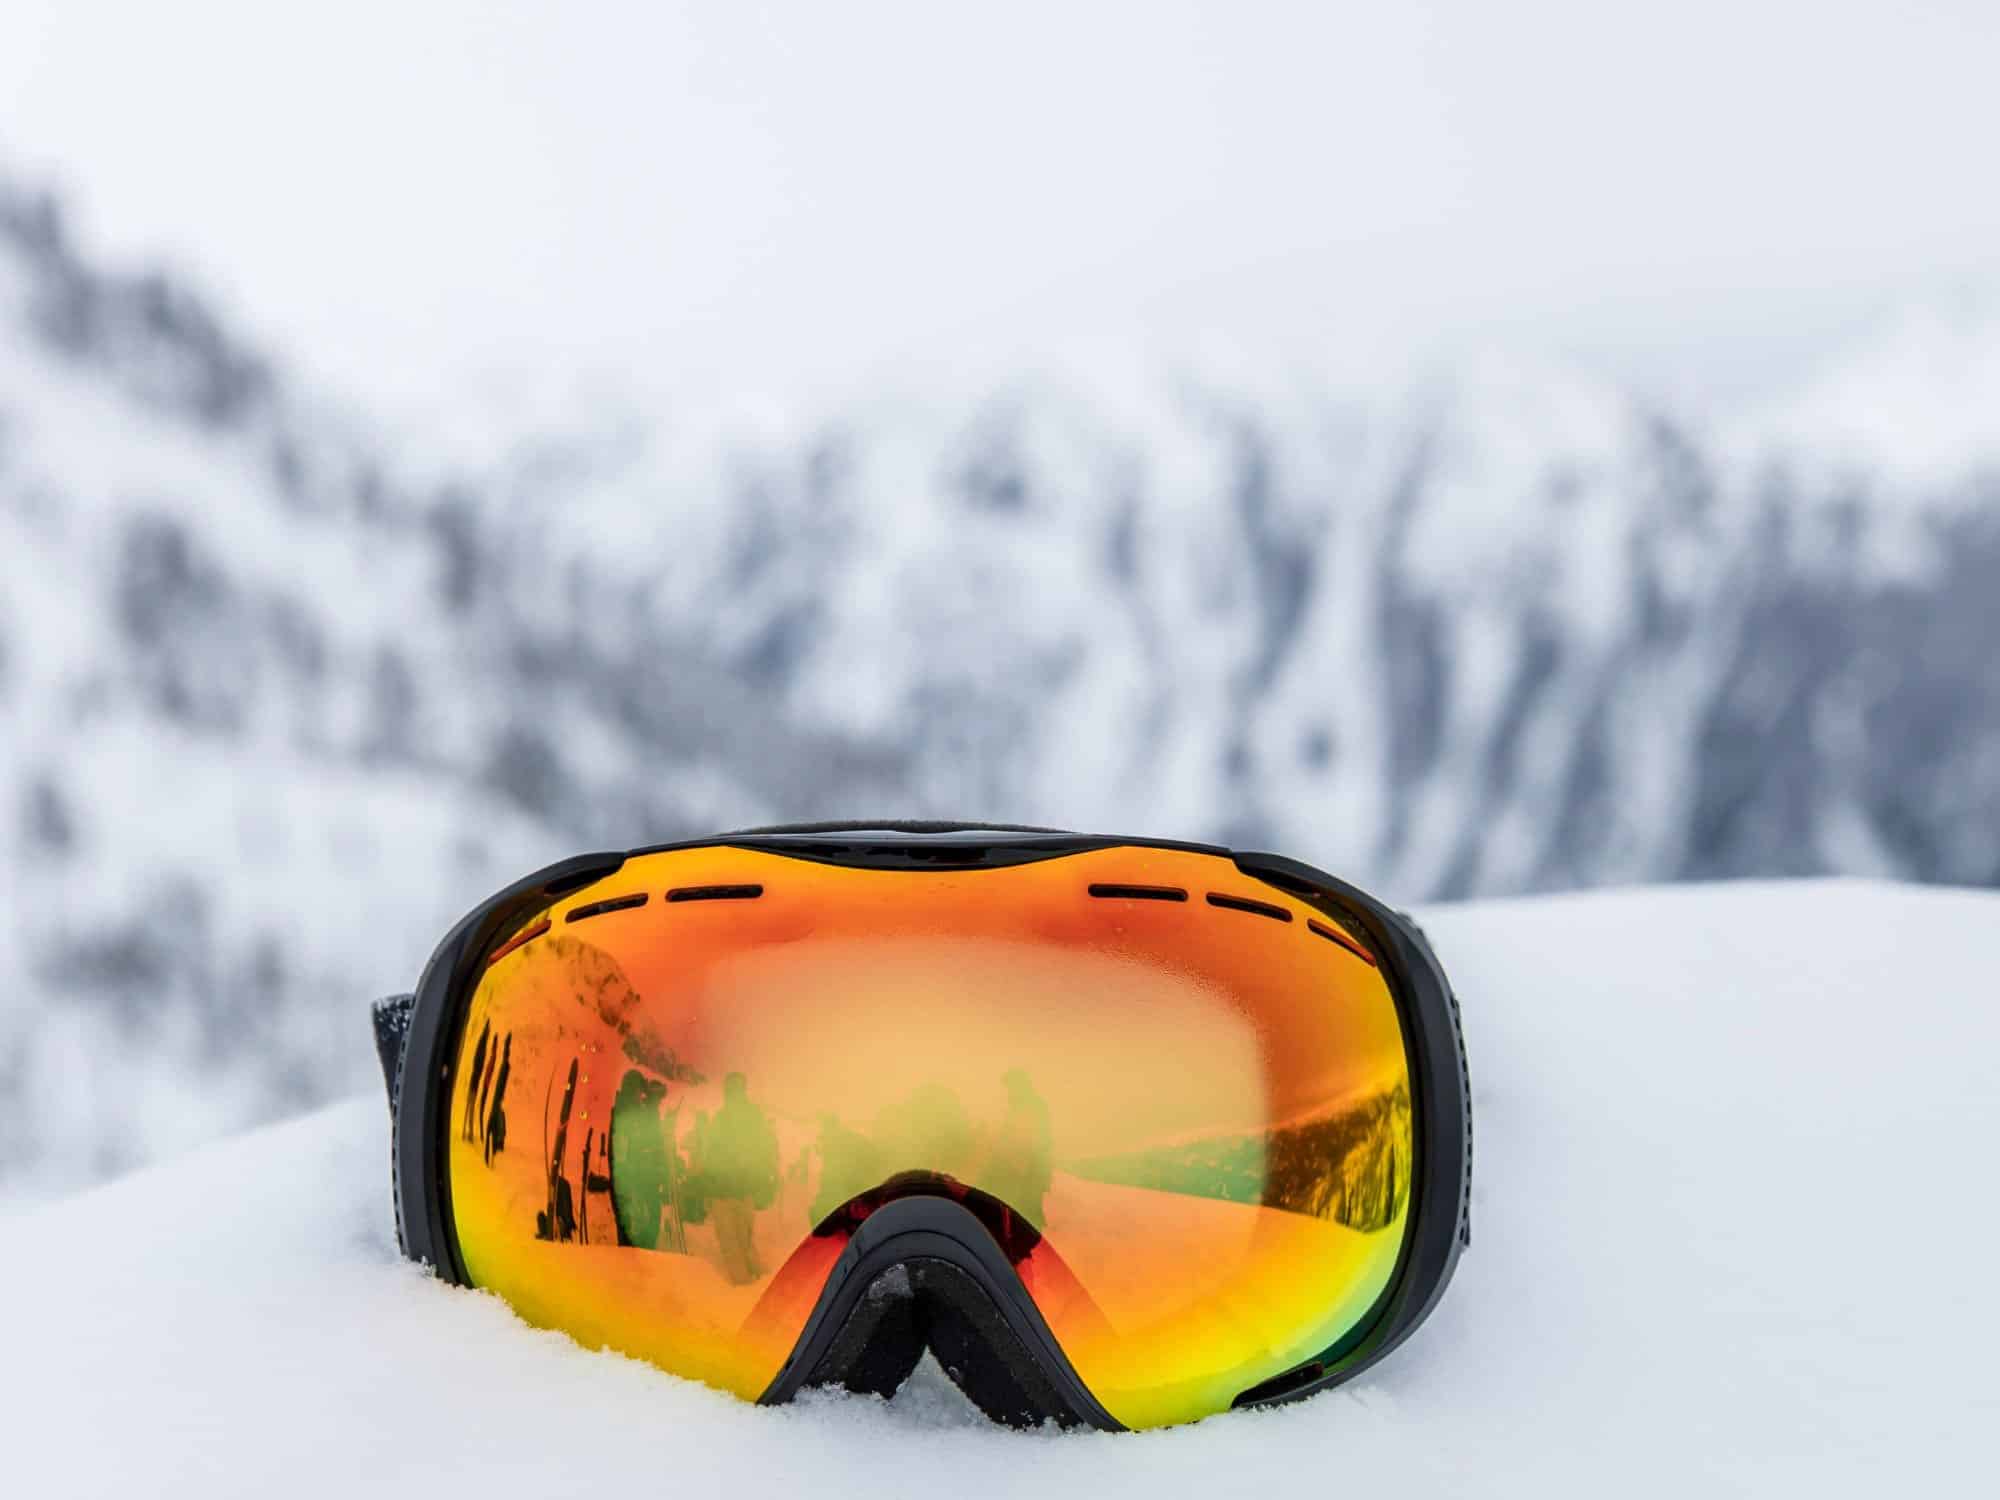 Ski goggles - ski essentials - what to pack for a ski trip